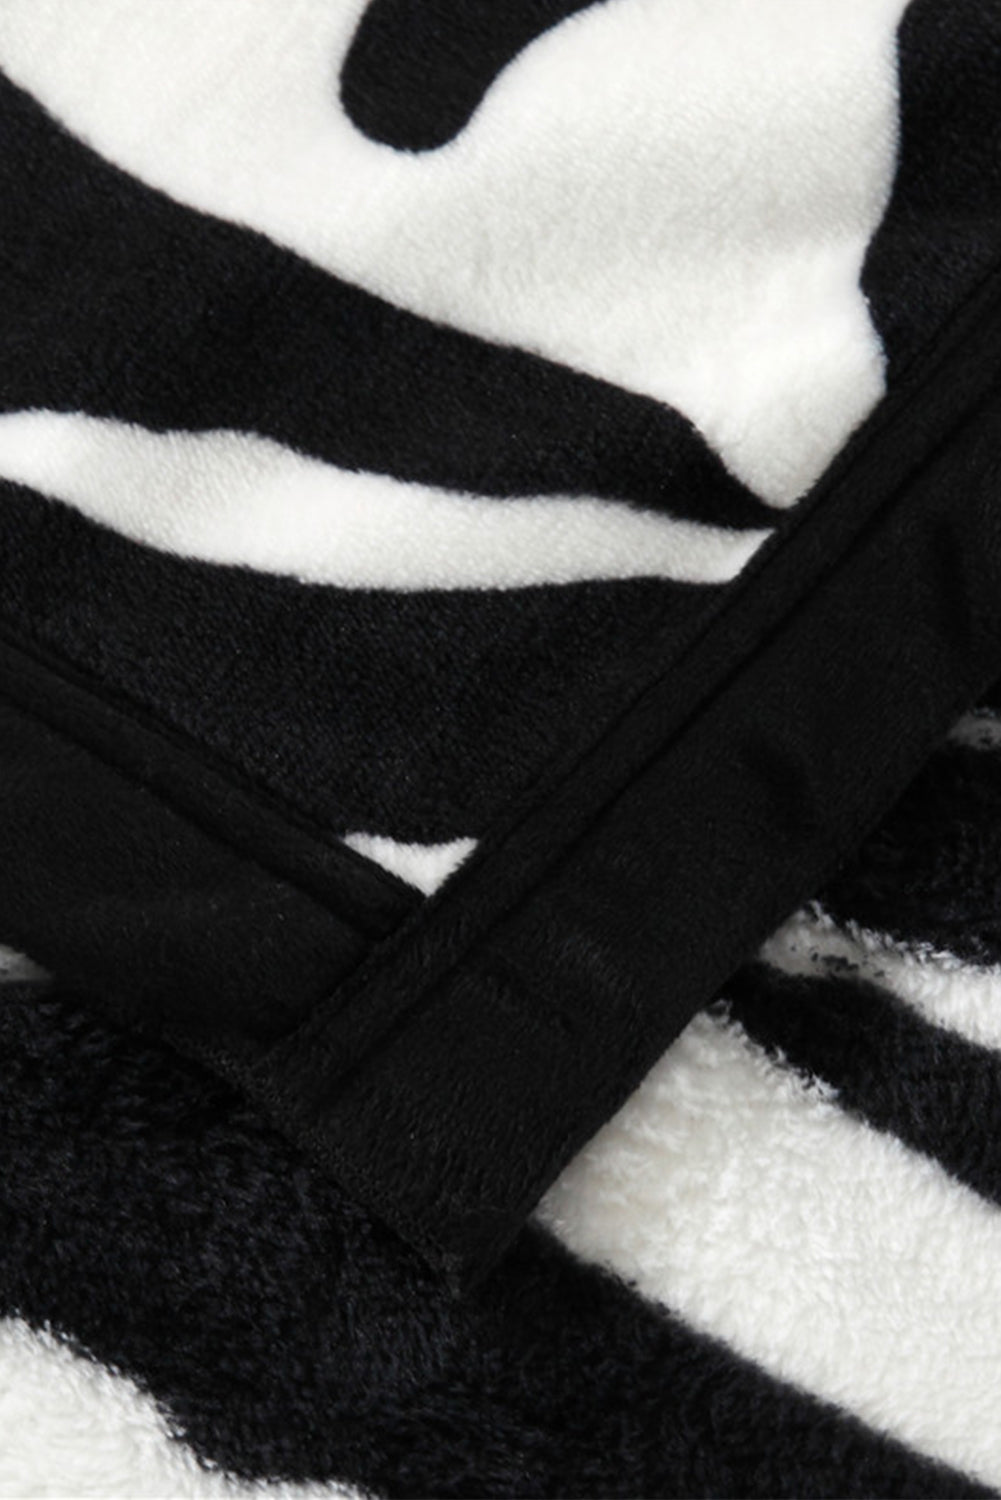 Black 200*150cm Soft Cow Print Coral Fleece Blanket